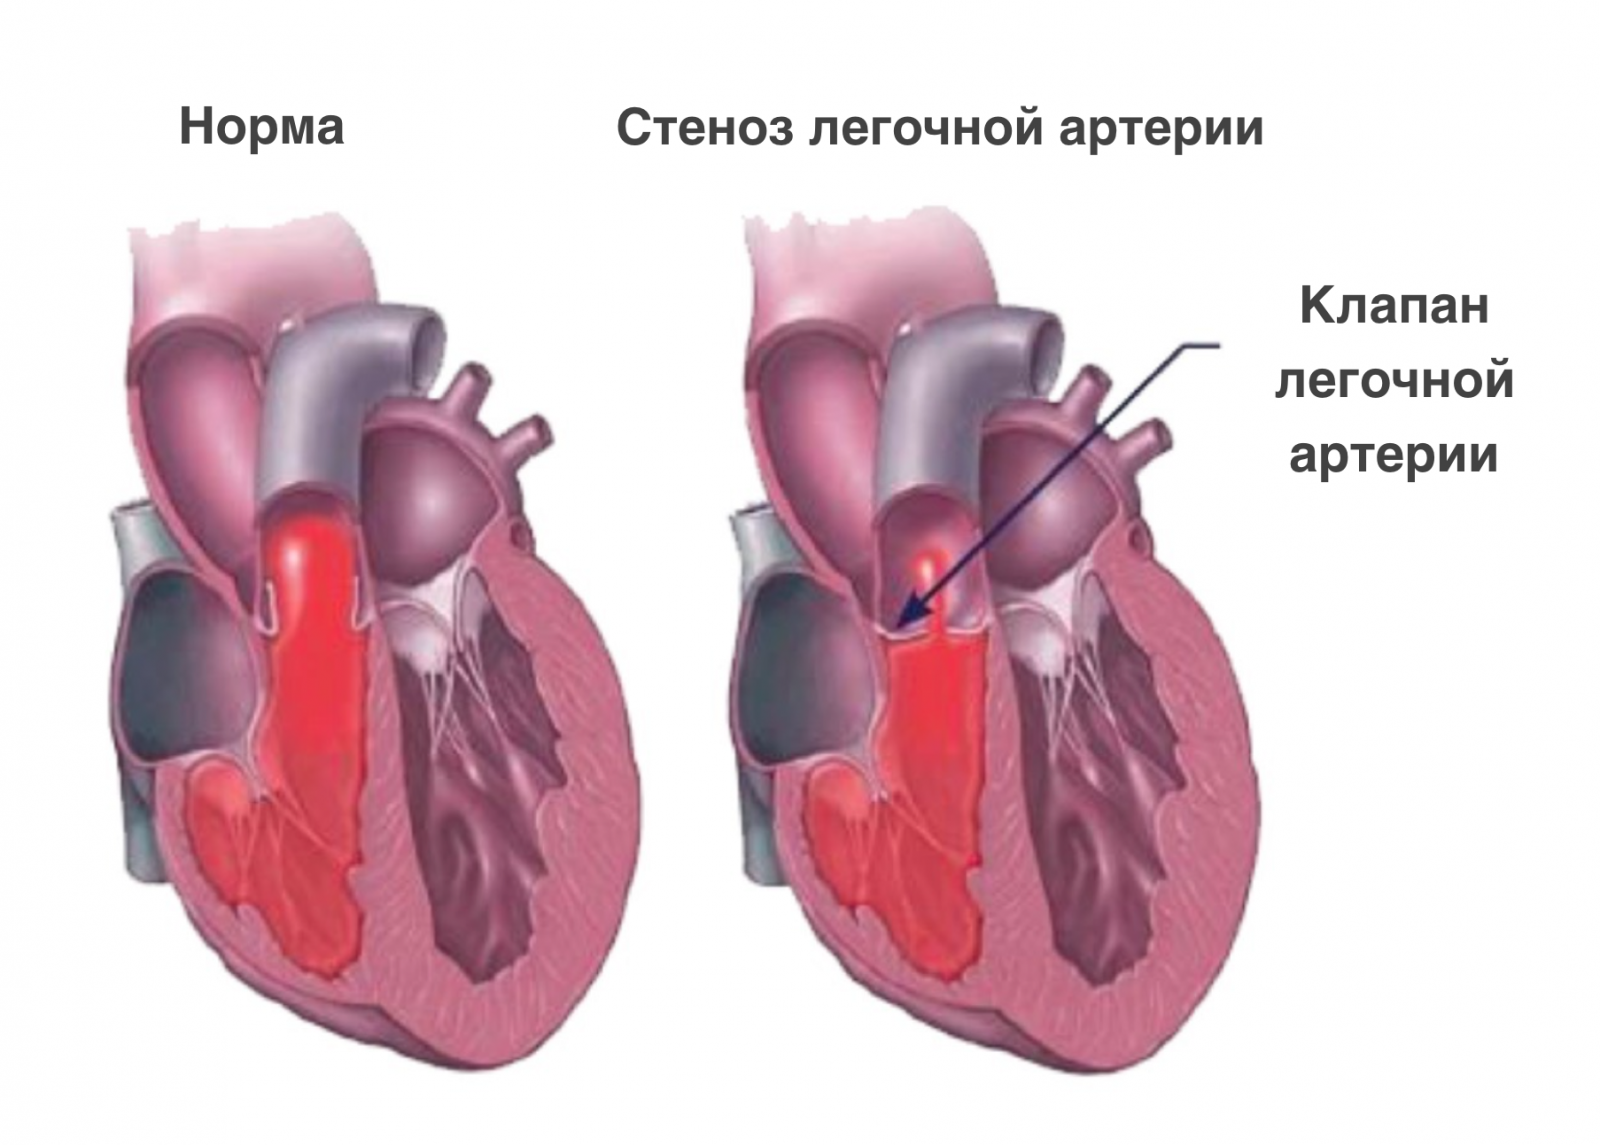 Стеноз клапана легочной артерии. Стеноз артериального клапана. Пролапс трикуспидального клапана 1-2 степени. Пролапс трехстворчатого клапана. Легочная артерия створки